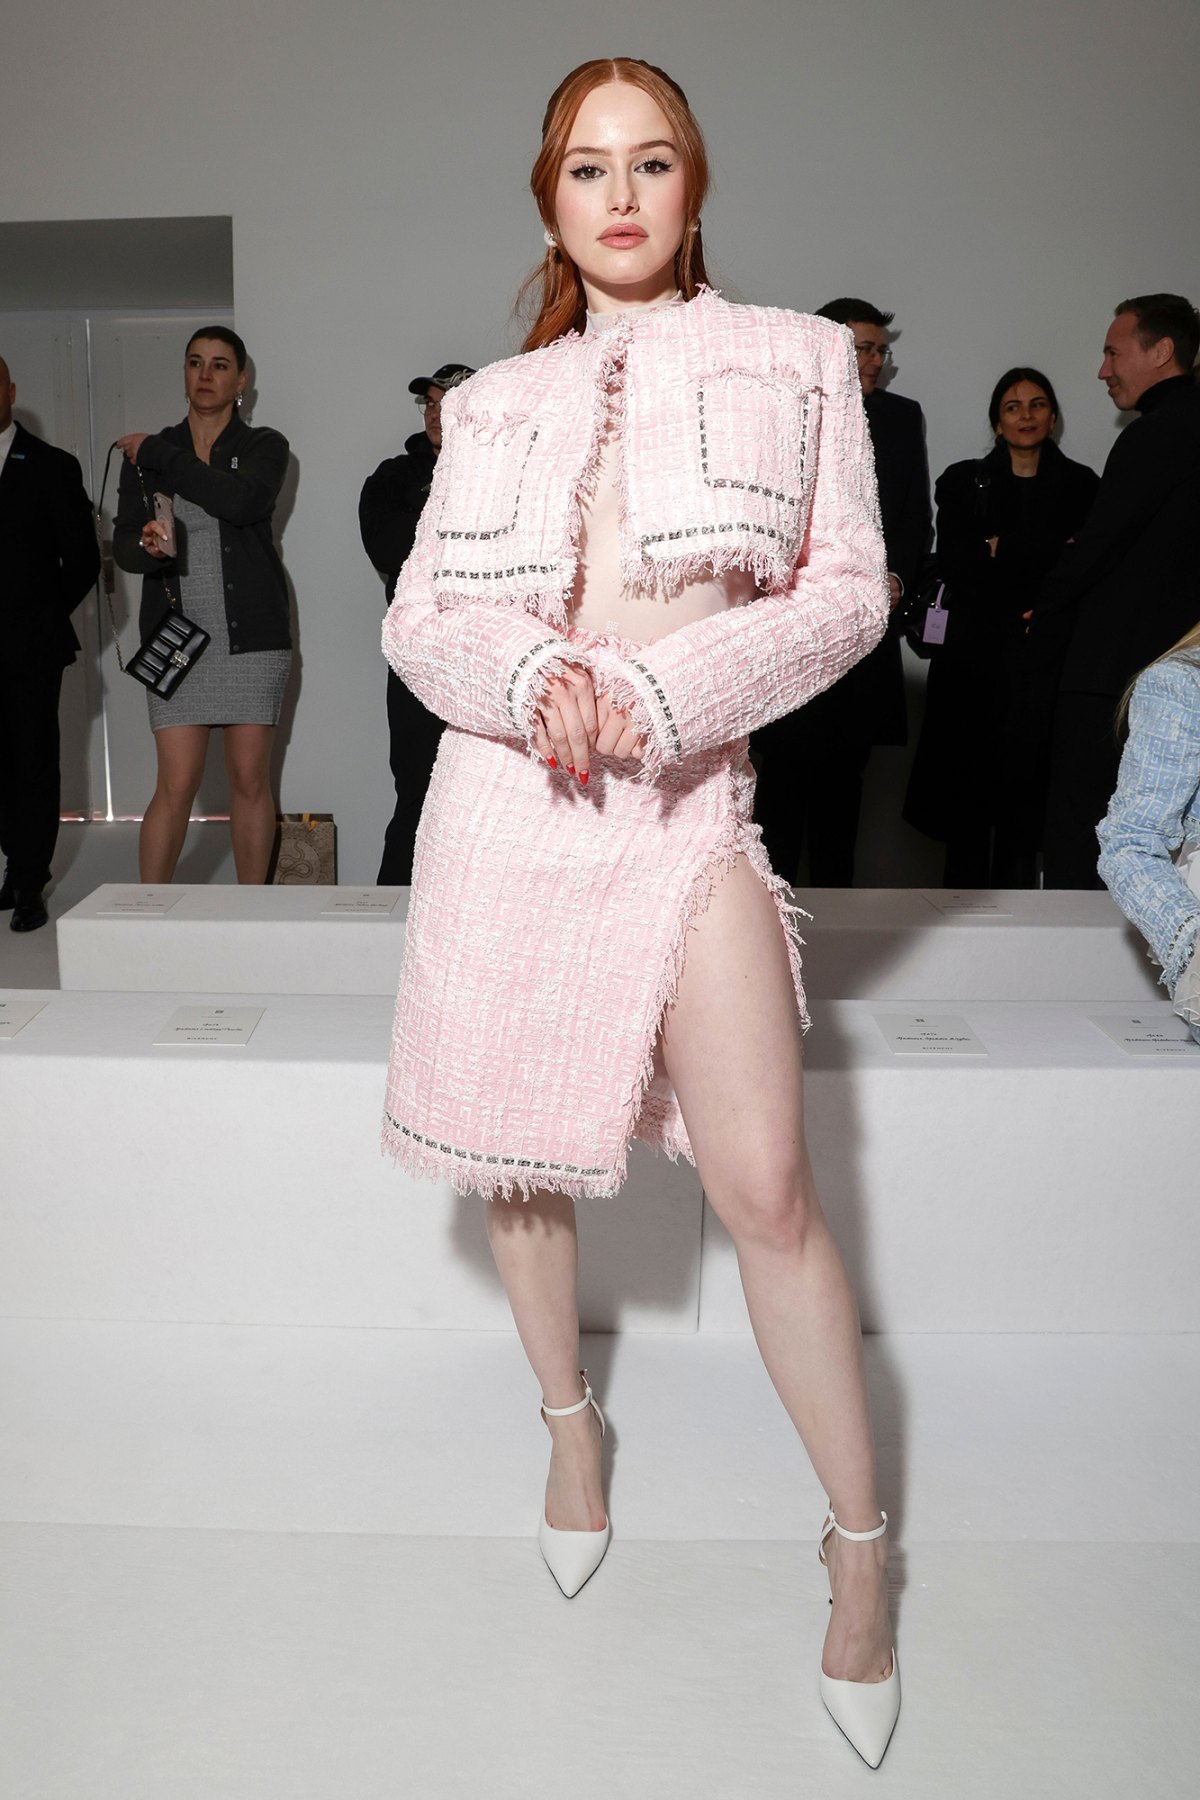 Zendaya Dons White-Hot Style in Pumps for Louis Vuitton's Paris